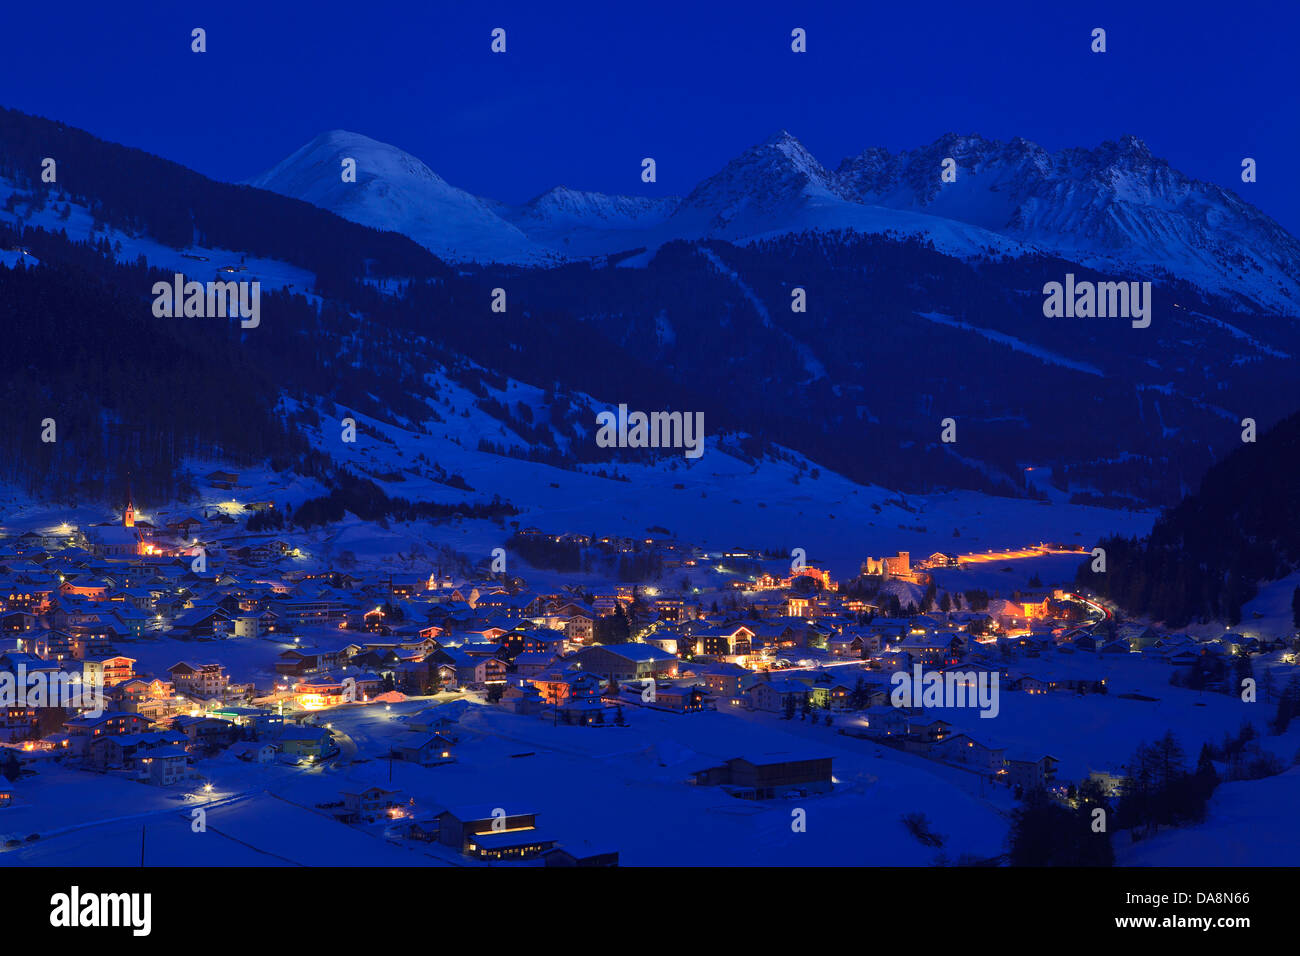 Austria, Europa Tyrol, Oberinntal, Nauders, Oberes Gericht, Passo Resia, inverno, sera, crepuscolo, crepuscolo, notte, luci, turiste Foto Stock